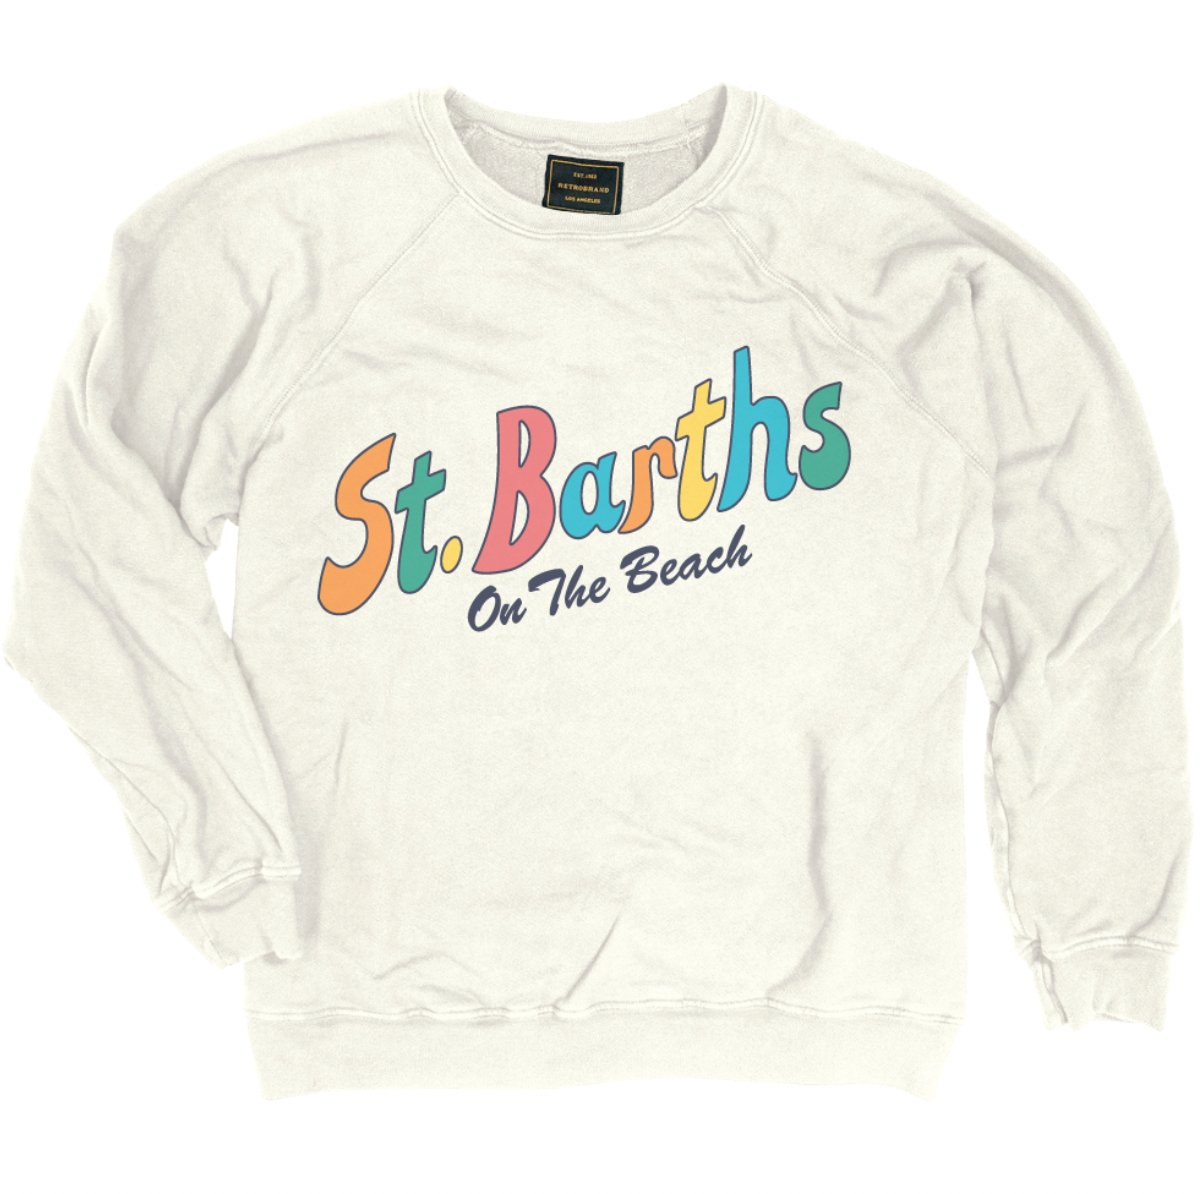 St Barths Vintage French Terry Sweatshirt - Babette